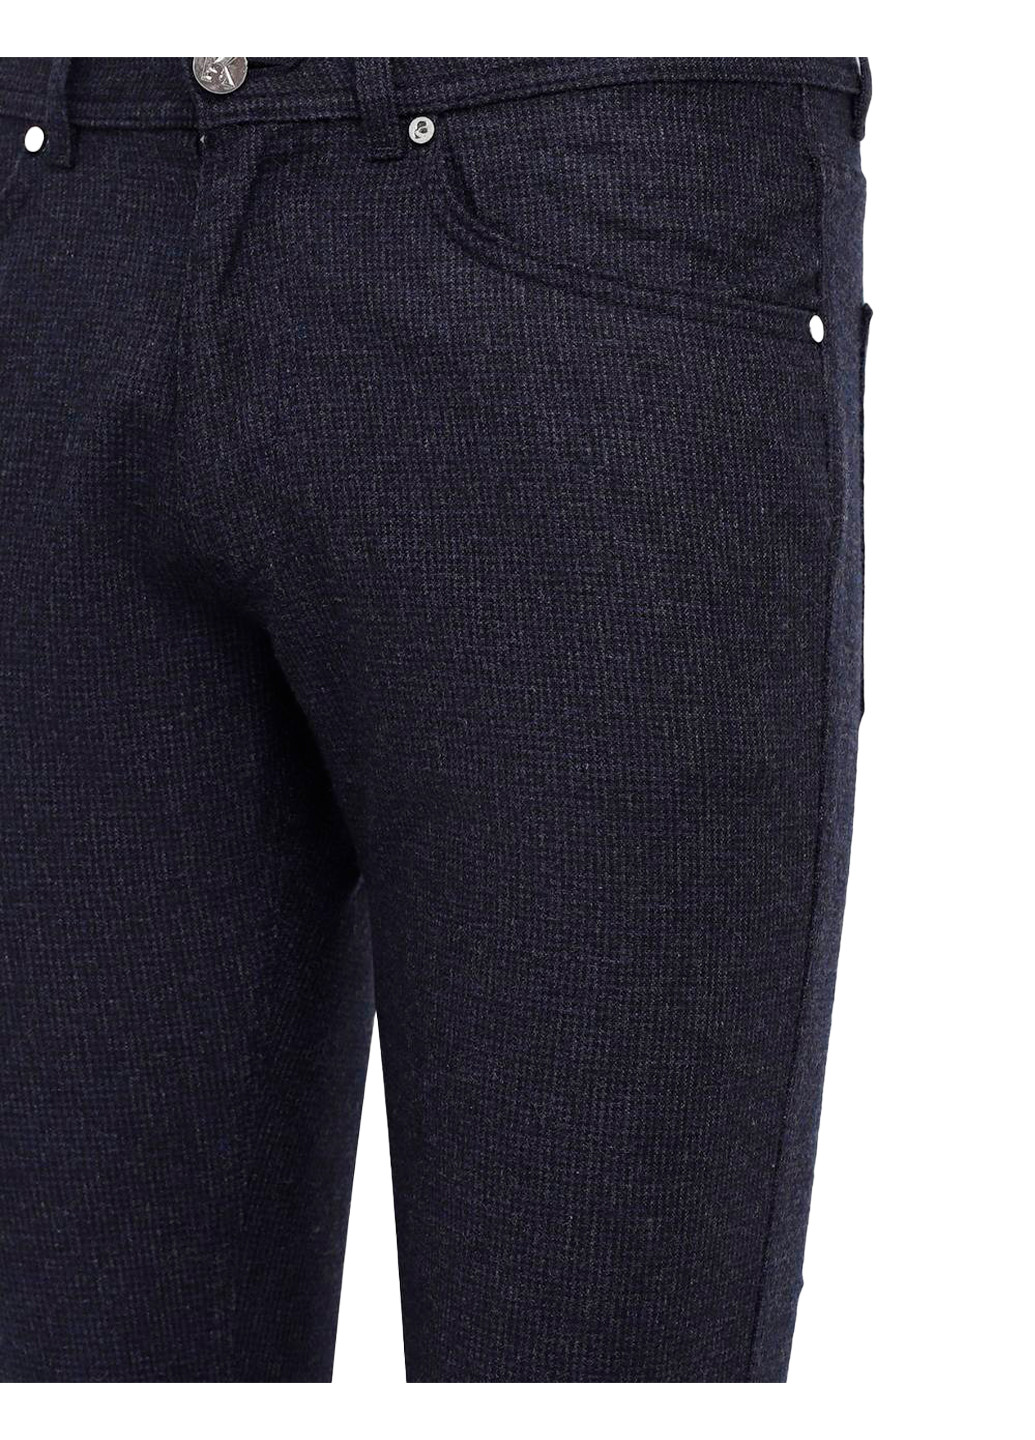 Темно-синие летние прямые летние легкие мужские джинсы Karl Lagerfeld